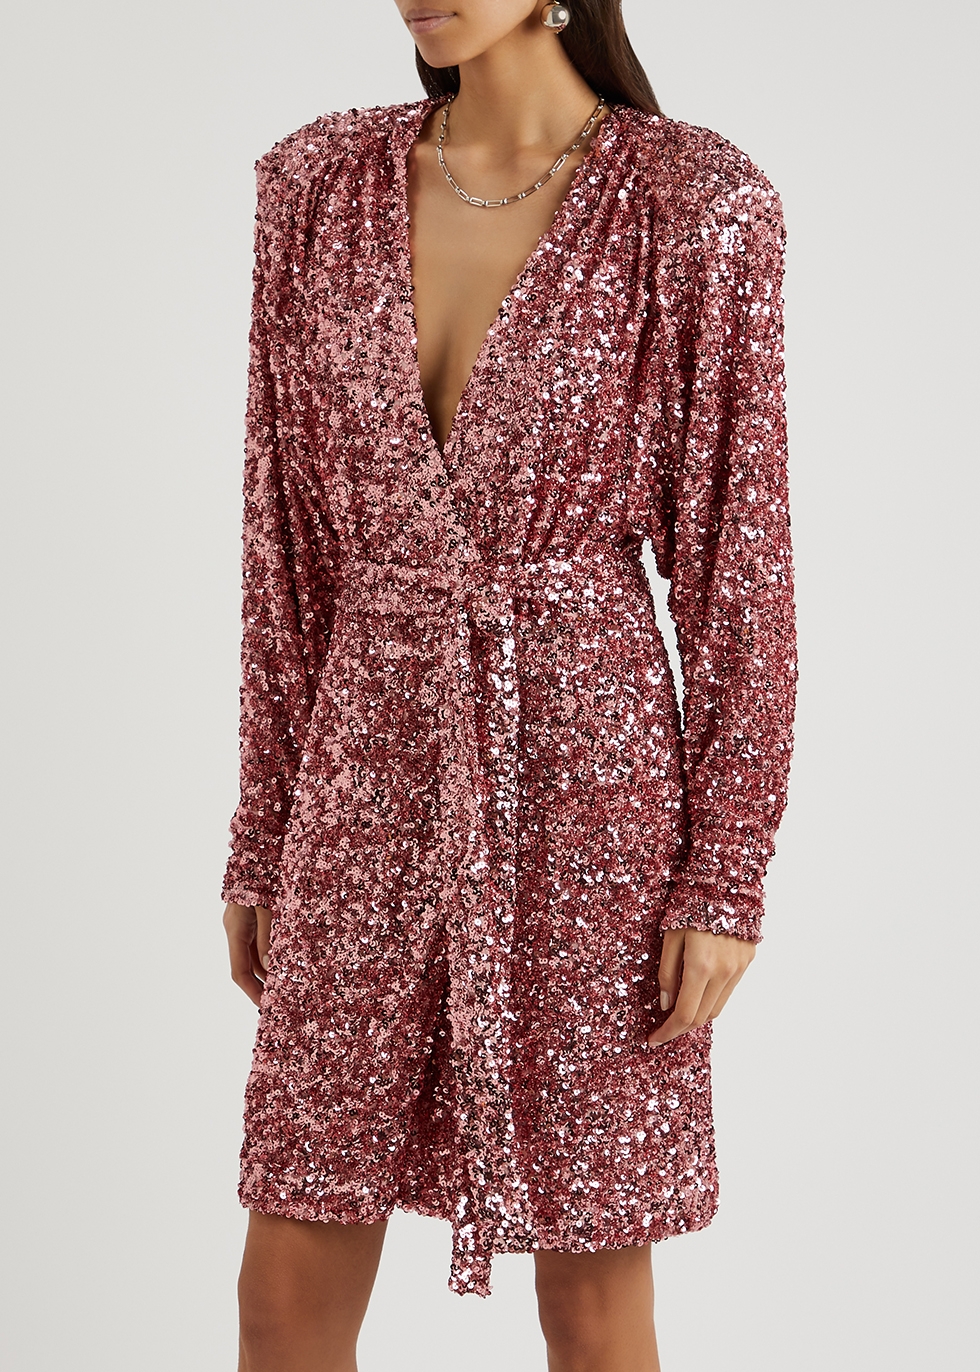 ROTATE Birger Christensen Samantha pink sequin wrap dress - Harvey Nichols